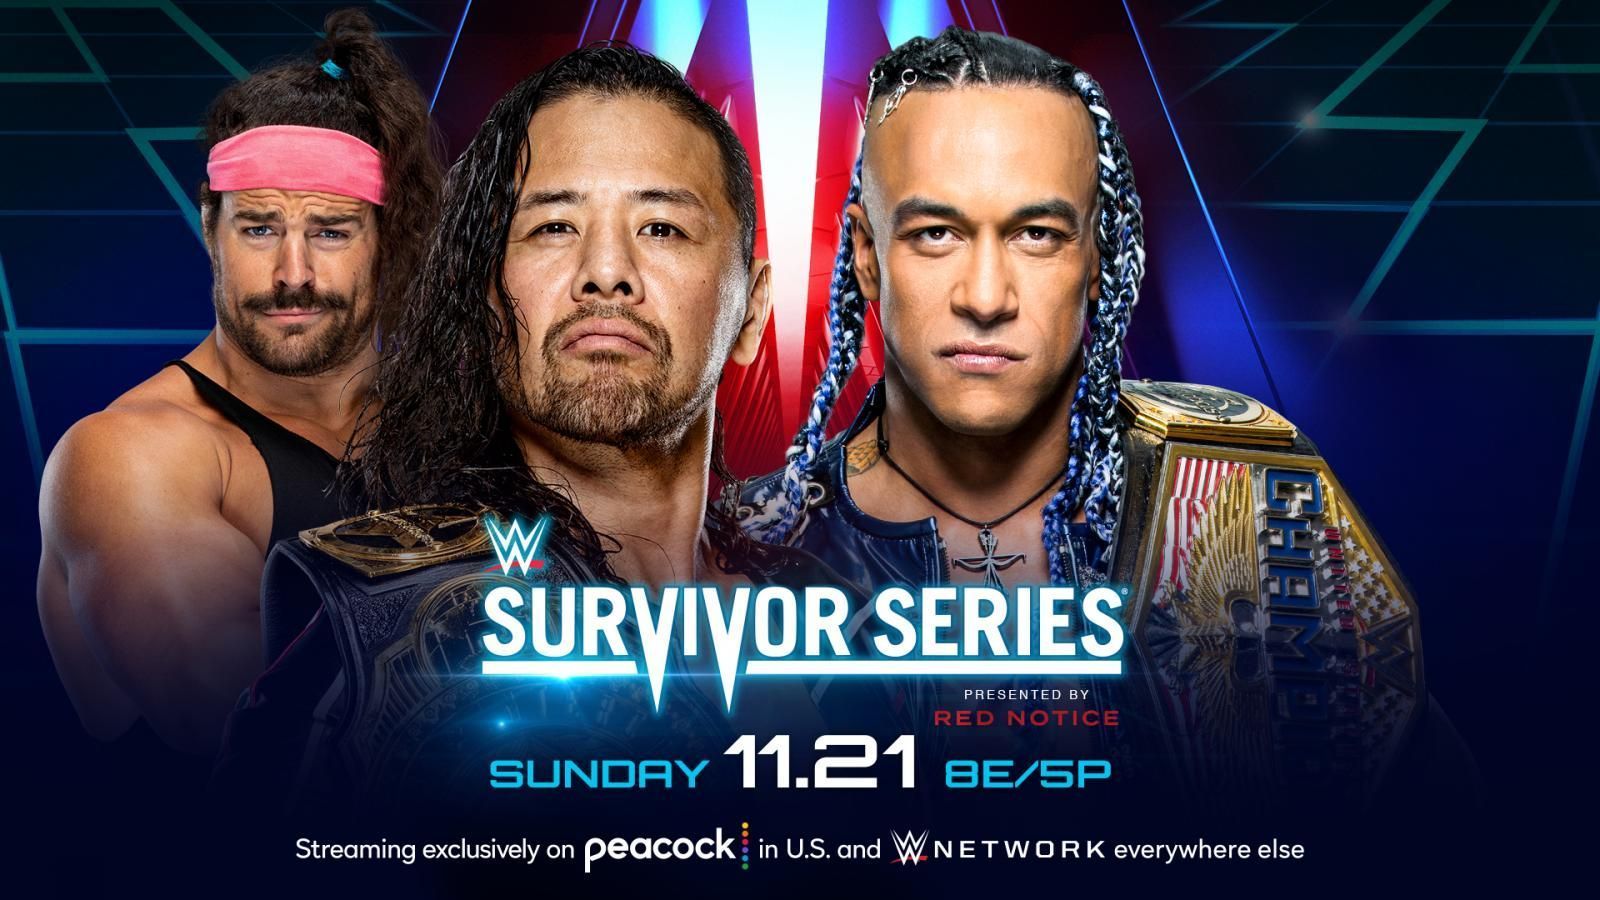 Shinsuke Nakamura and Damian Priest will lock horns at Survivor Series